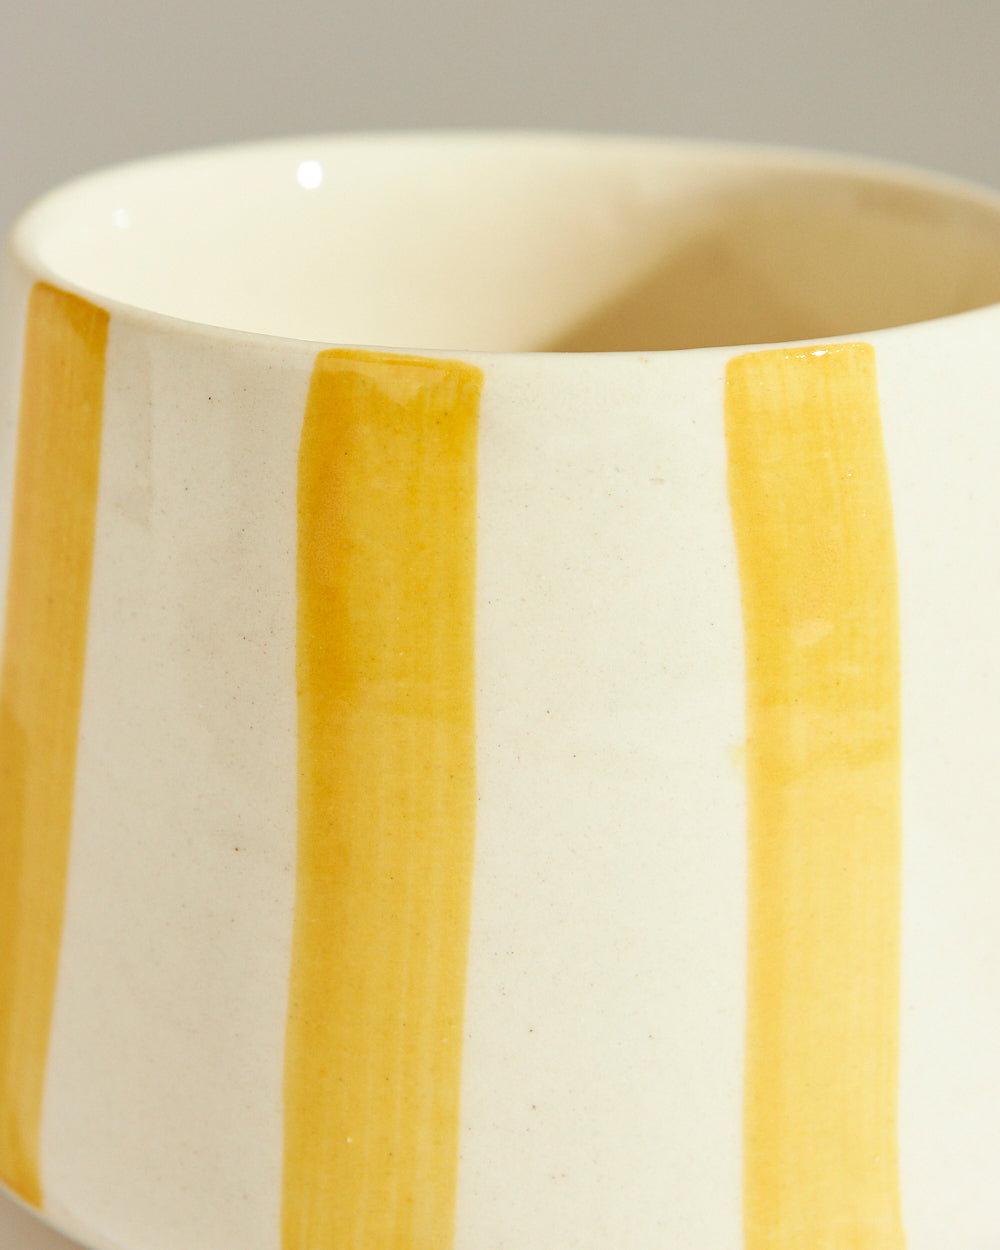 Essentials Love Stripes Mug- Yellow